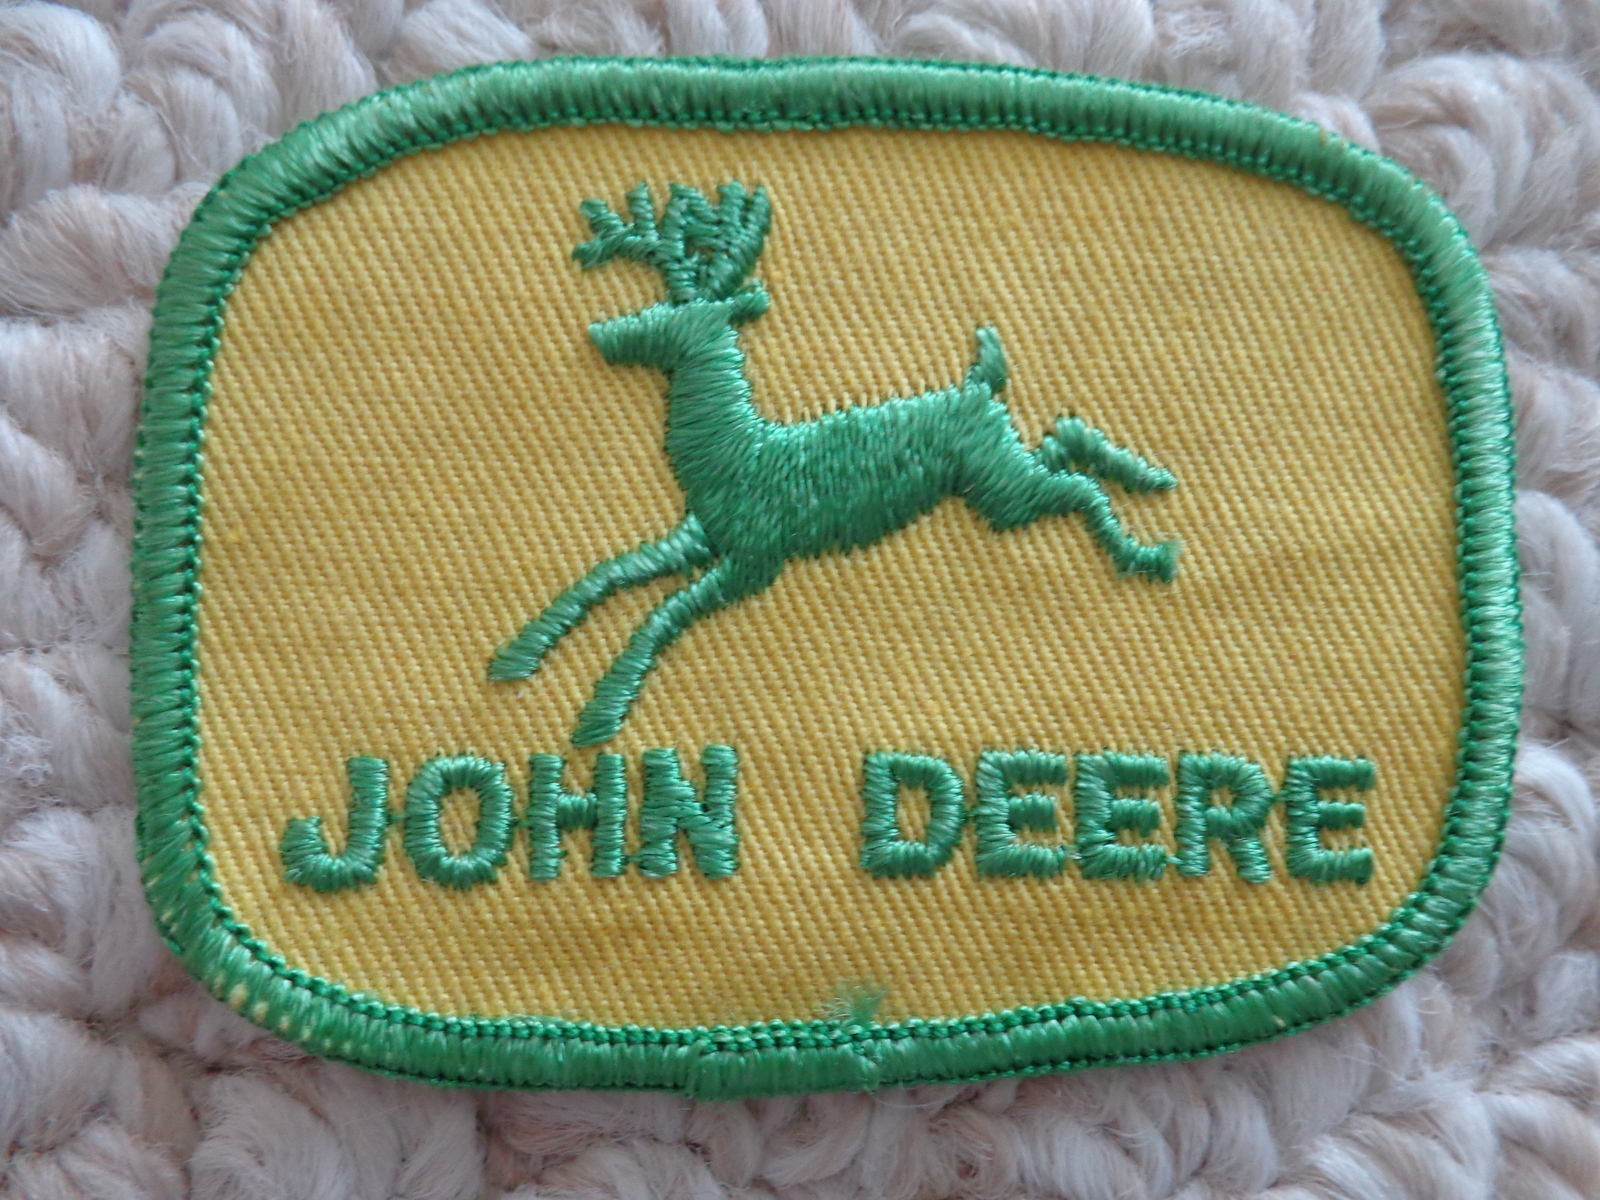 John Deere Embroidery Patterns John Deere Patch 1 Listing